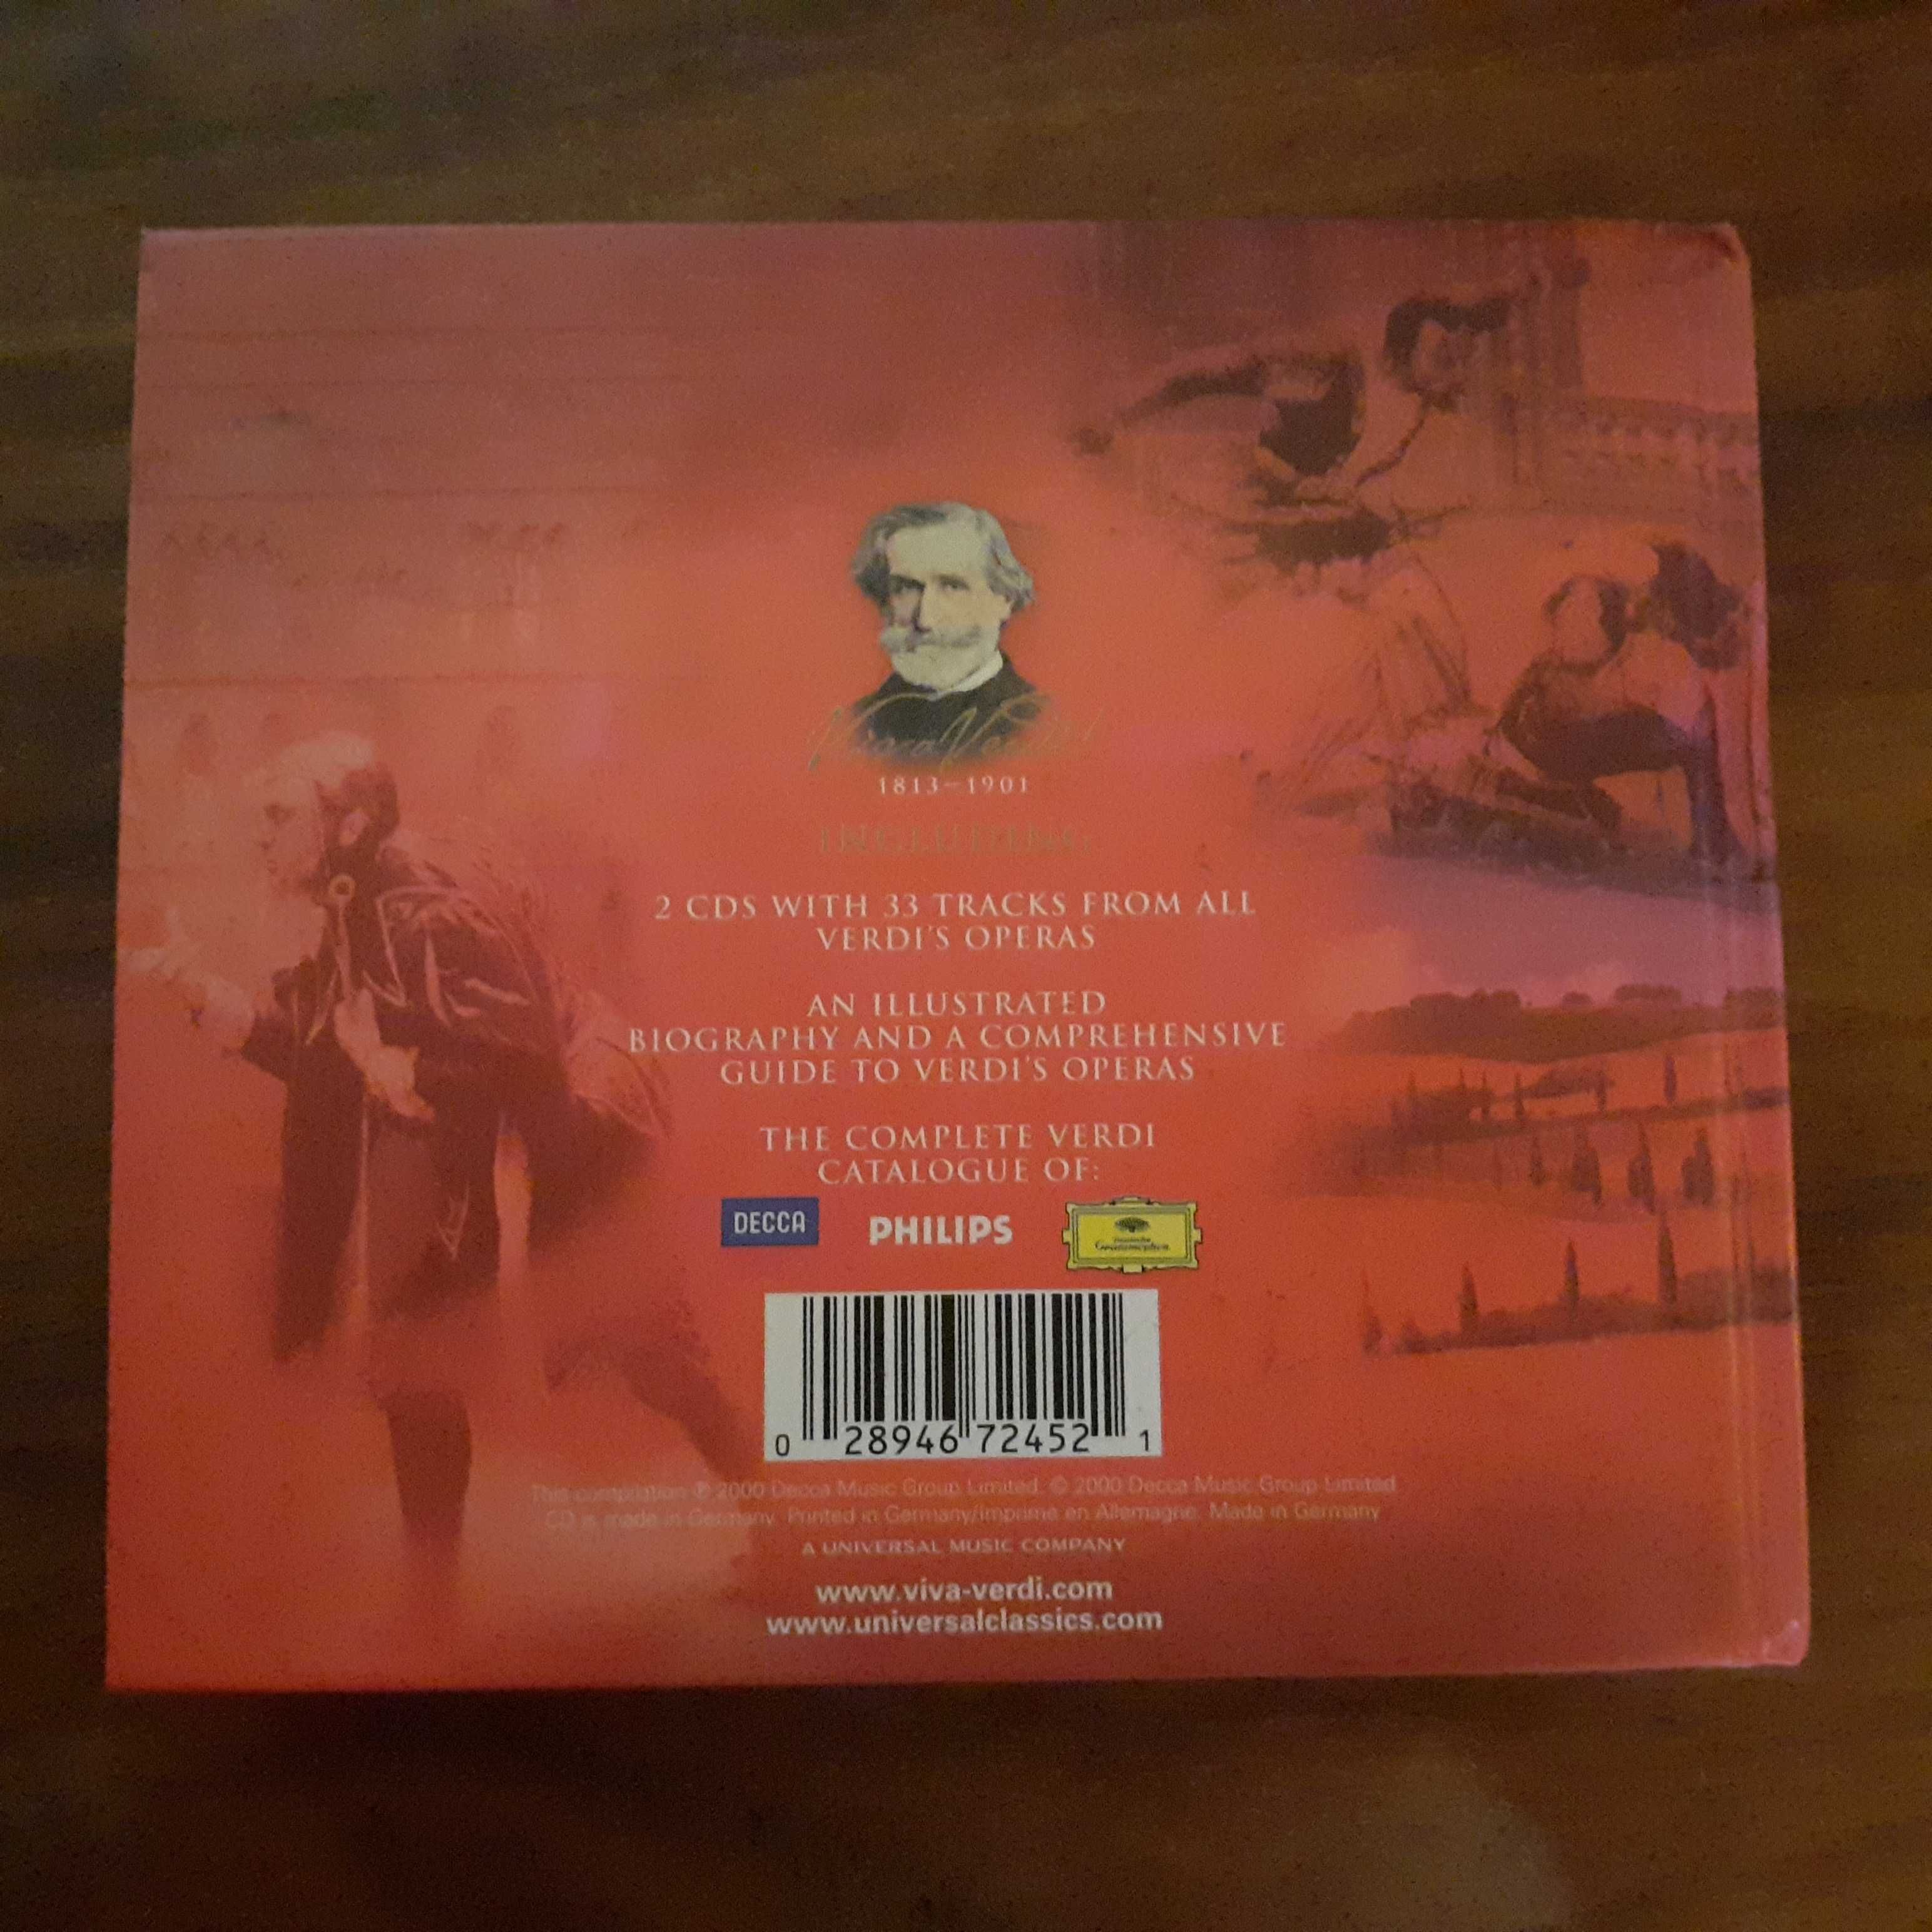 CD - Viva Verdi - 100th Anniversary Celebration 1813/1901 (2-CDS)